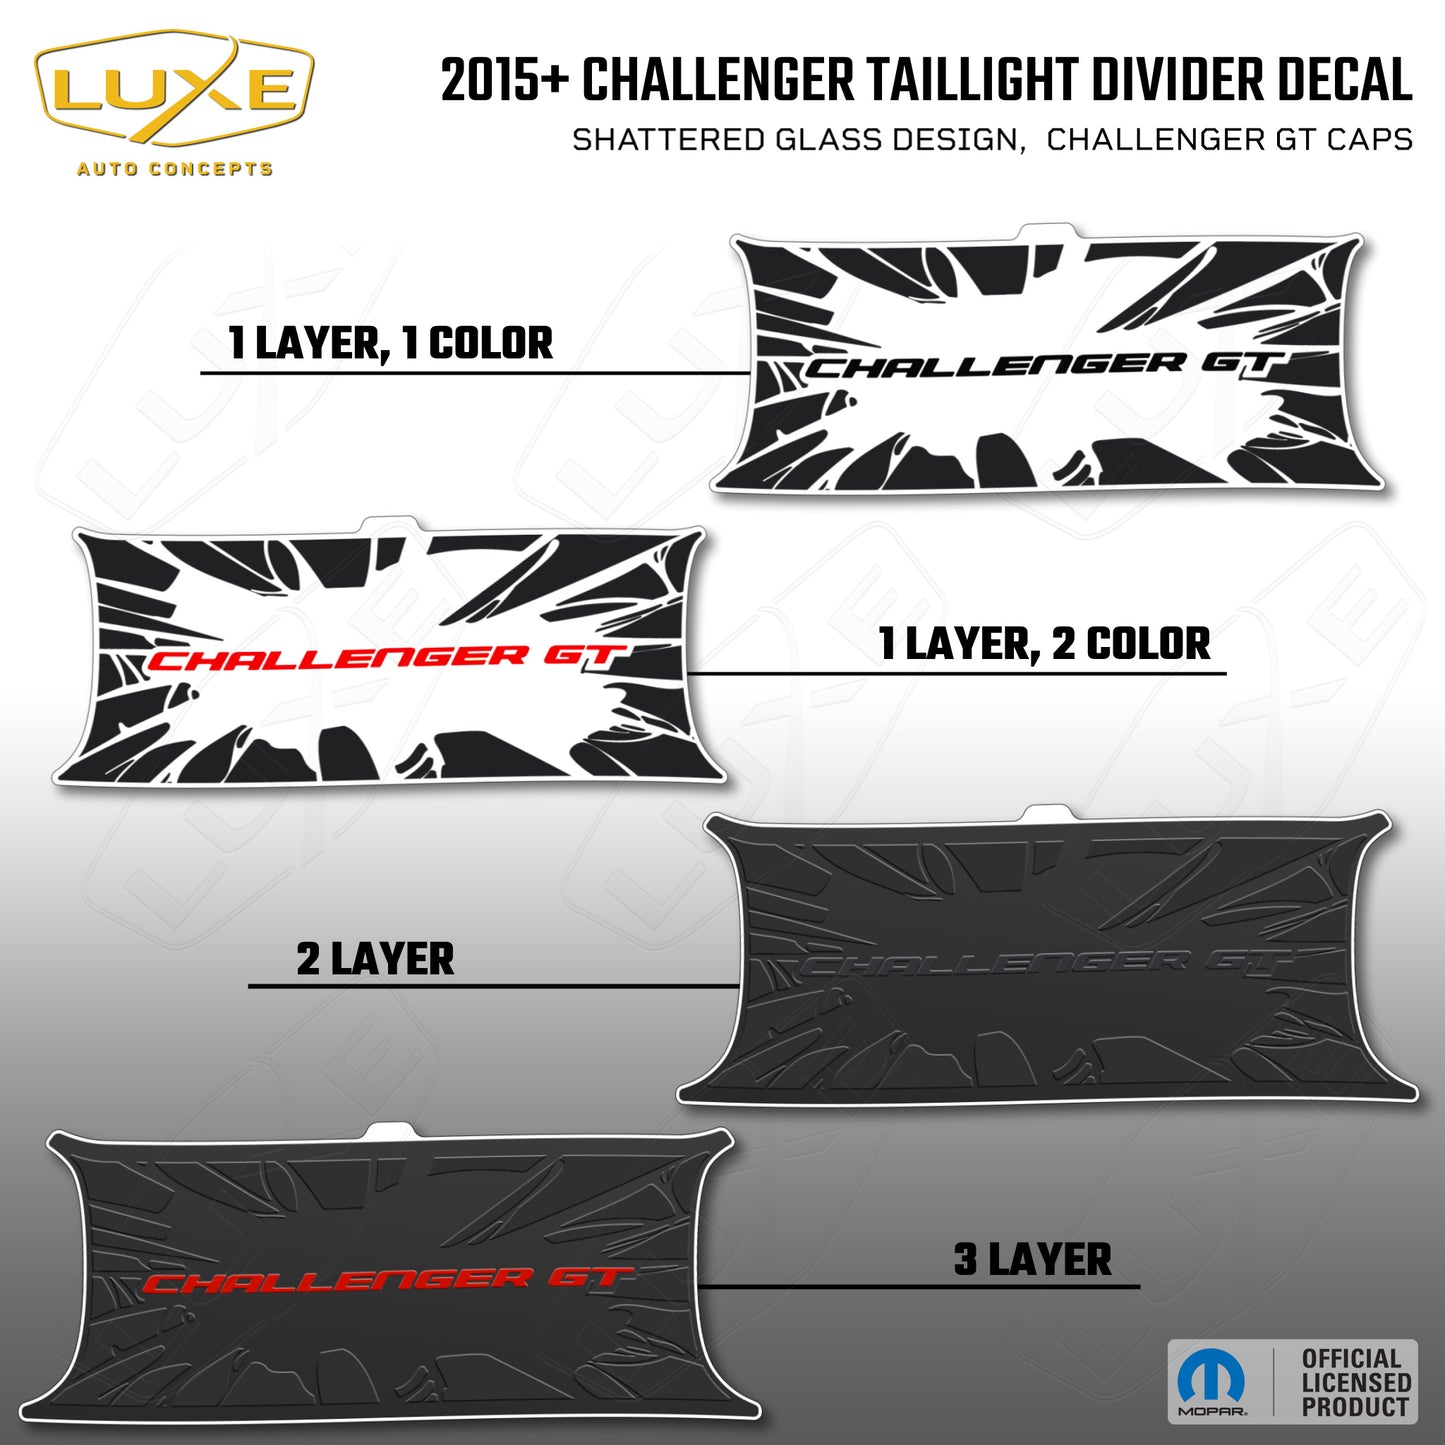 2015+ Challenger Taillight Center Divider Decal - Shattered Glass Design, Challenger GT Caps